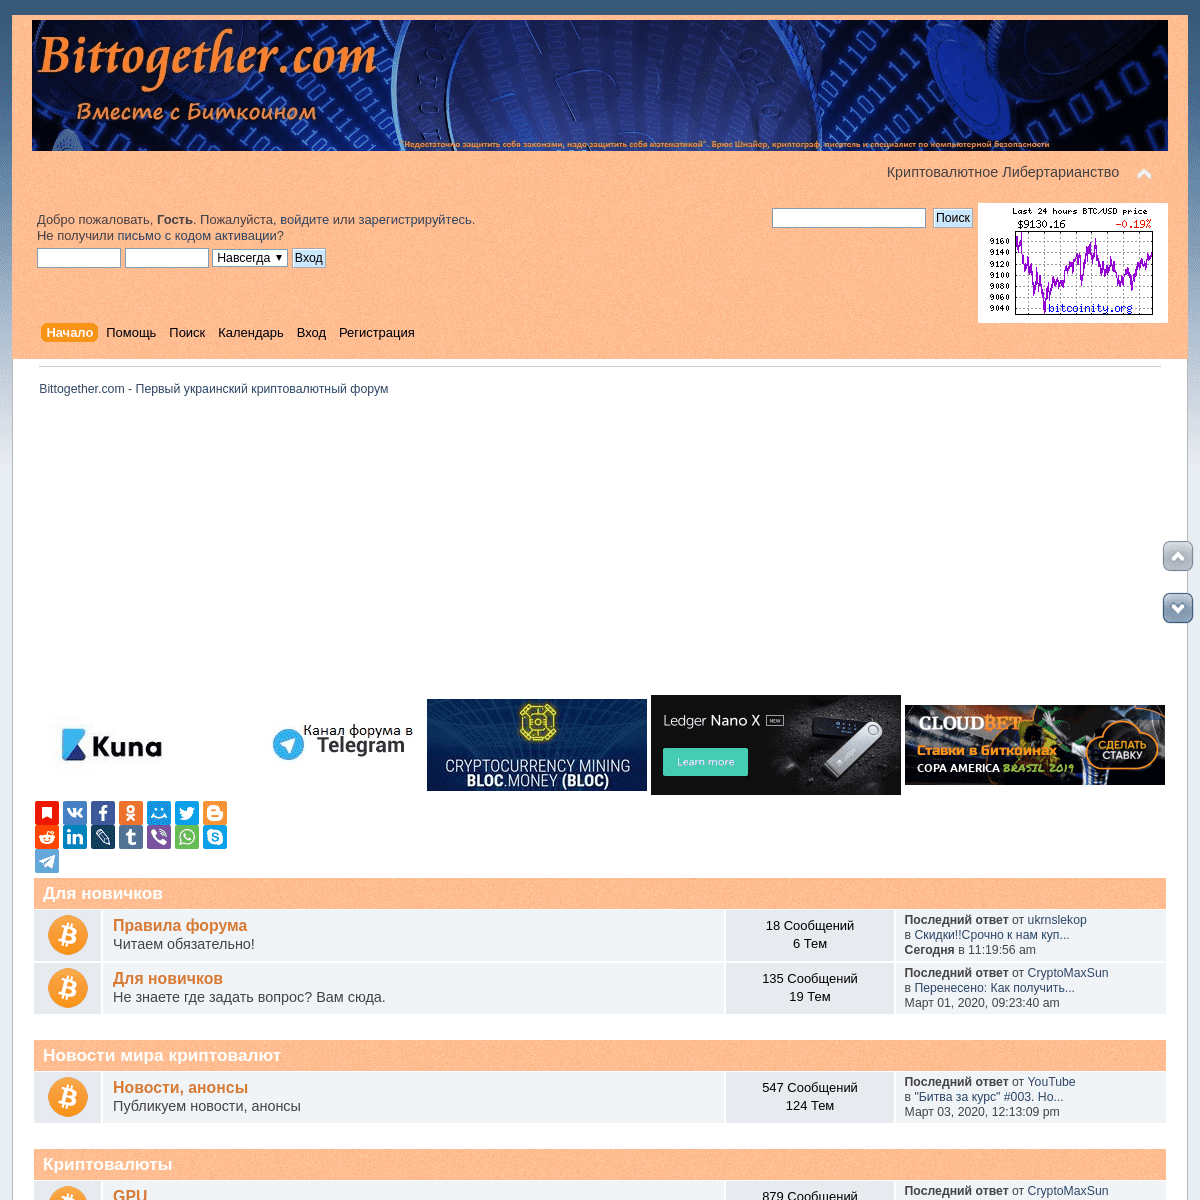 A complete backup of bittogether.com